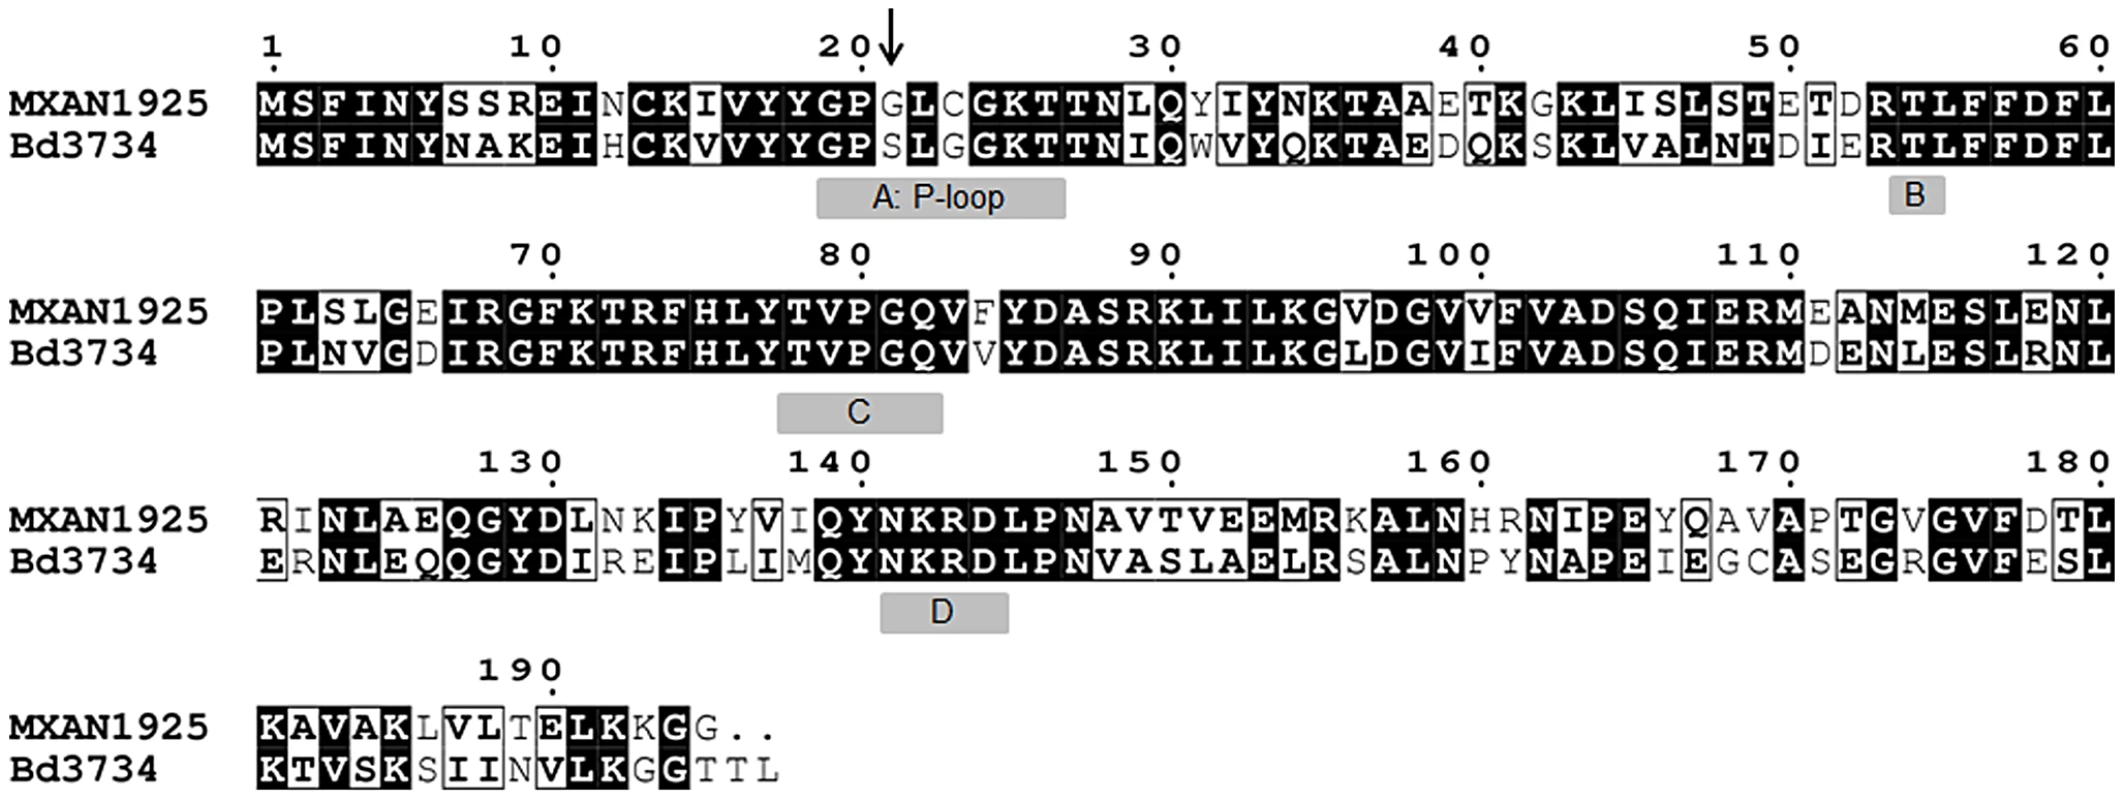 Protein alignment of MglA<sub>Mx</sub> and MglA<sub>Bd</sub>.